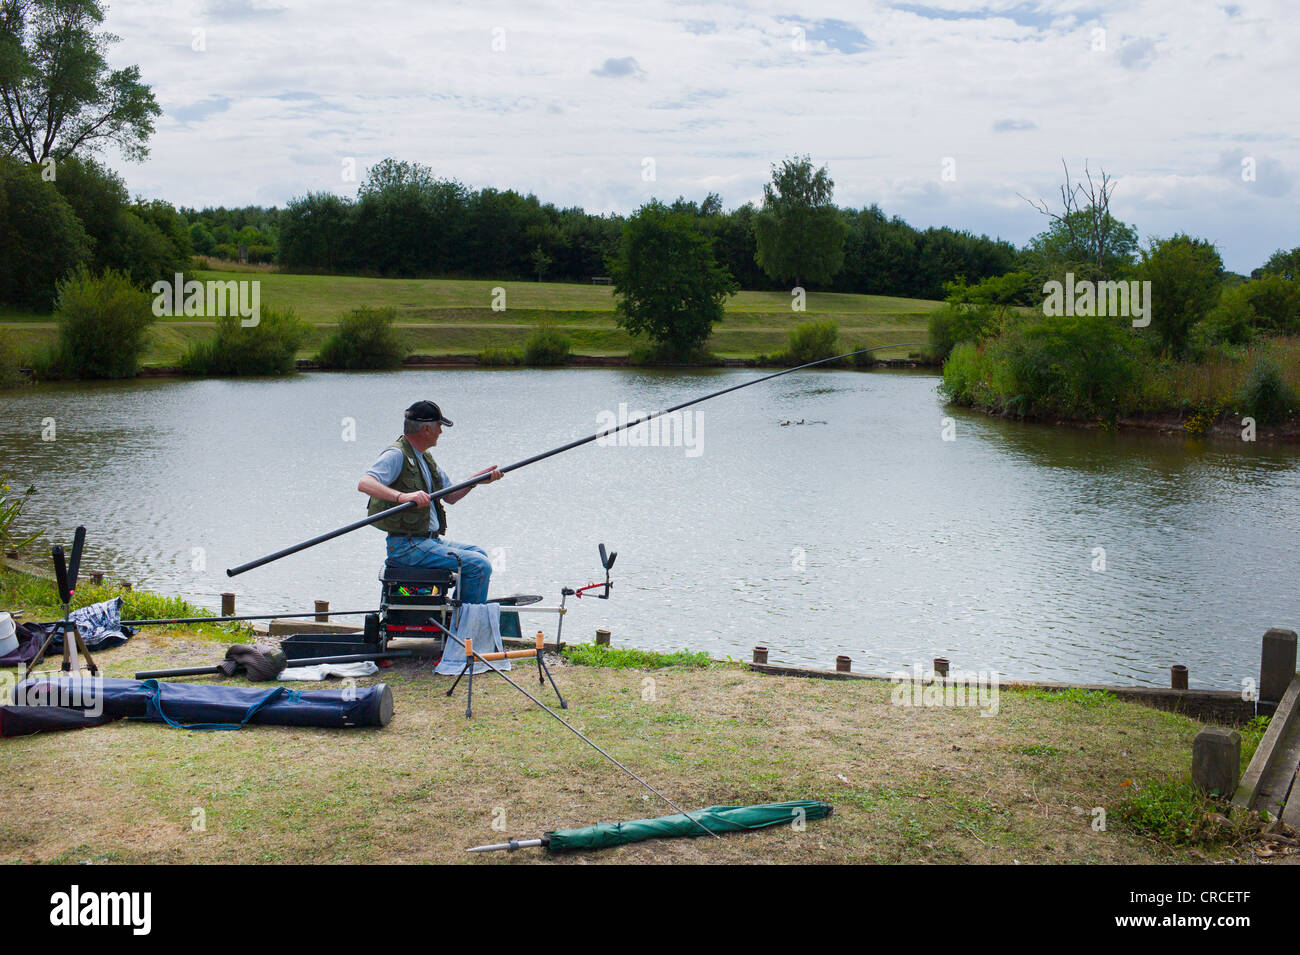 Coarse fishing uk carp hi-res stock photography and images - Alamy